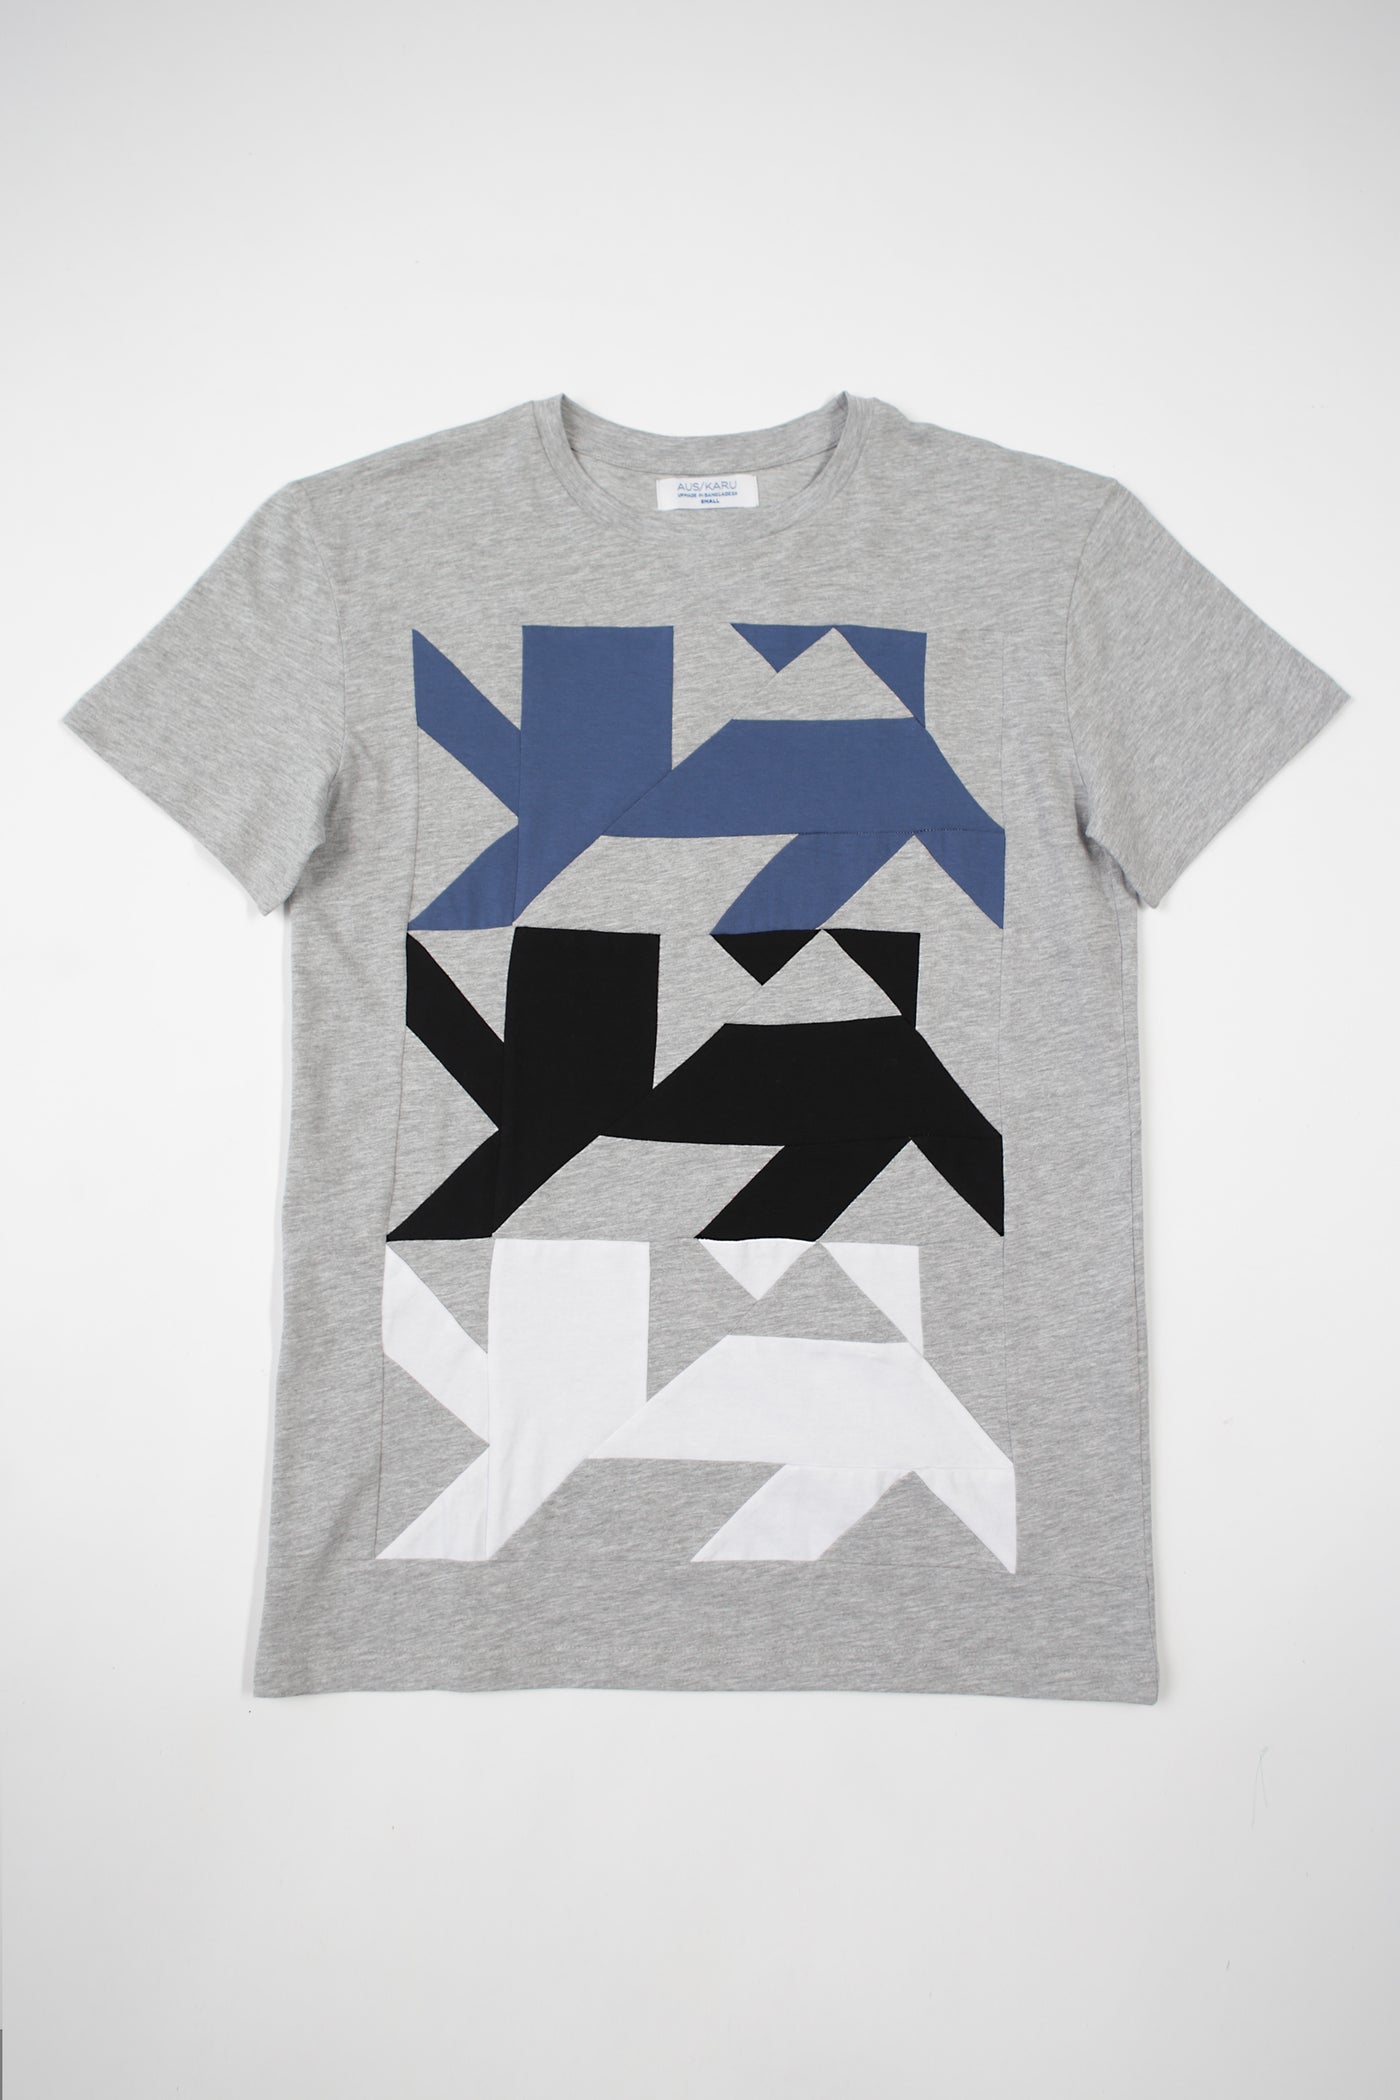 AUS/KARU lion shirt for men | Grey, tricolor